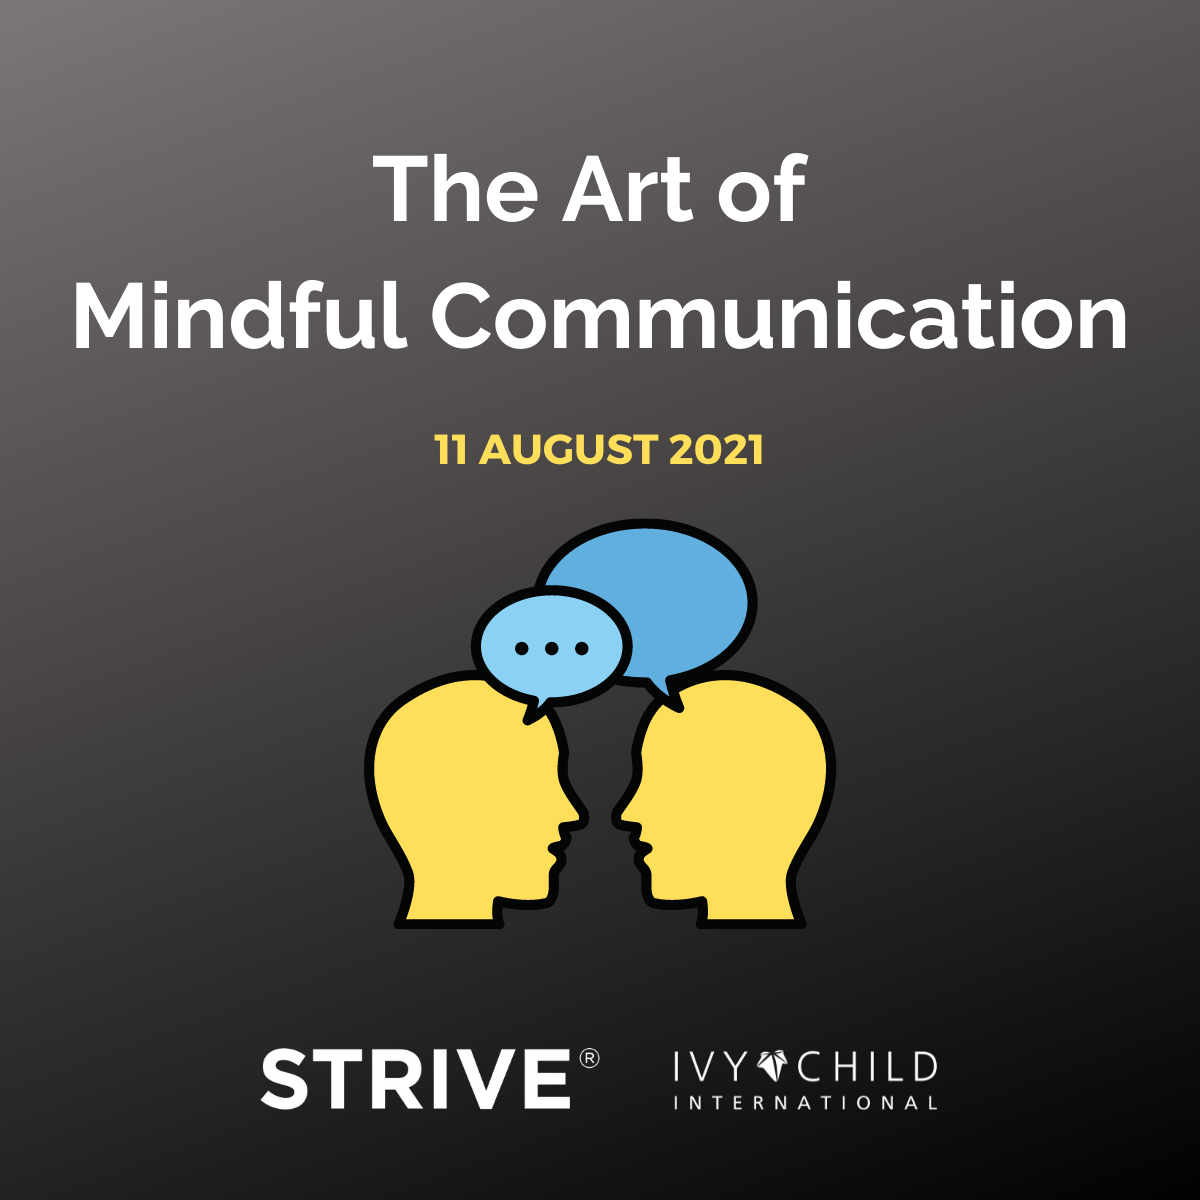 The Art of Mindful Communication